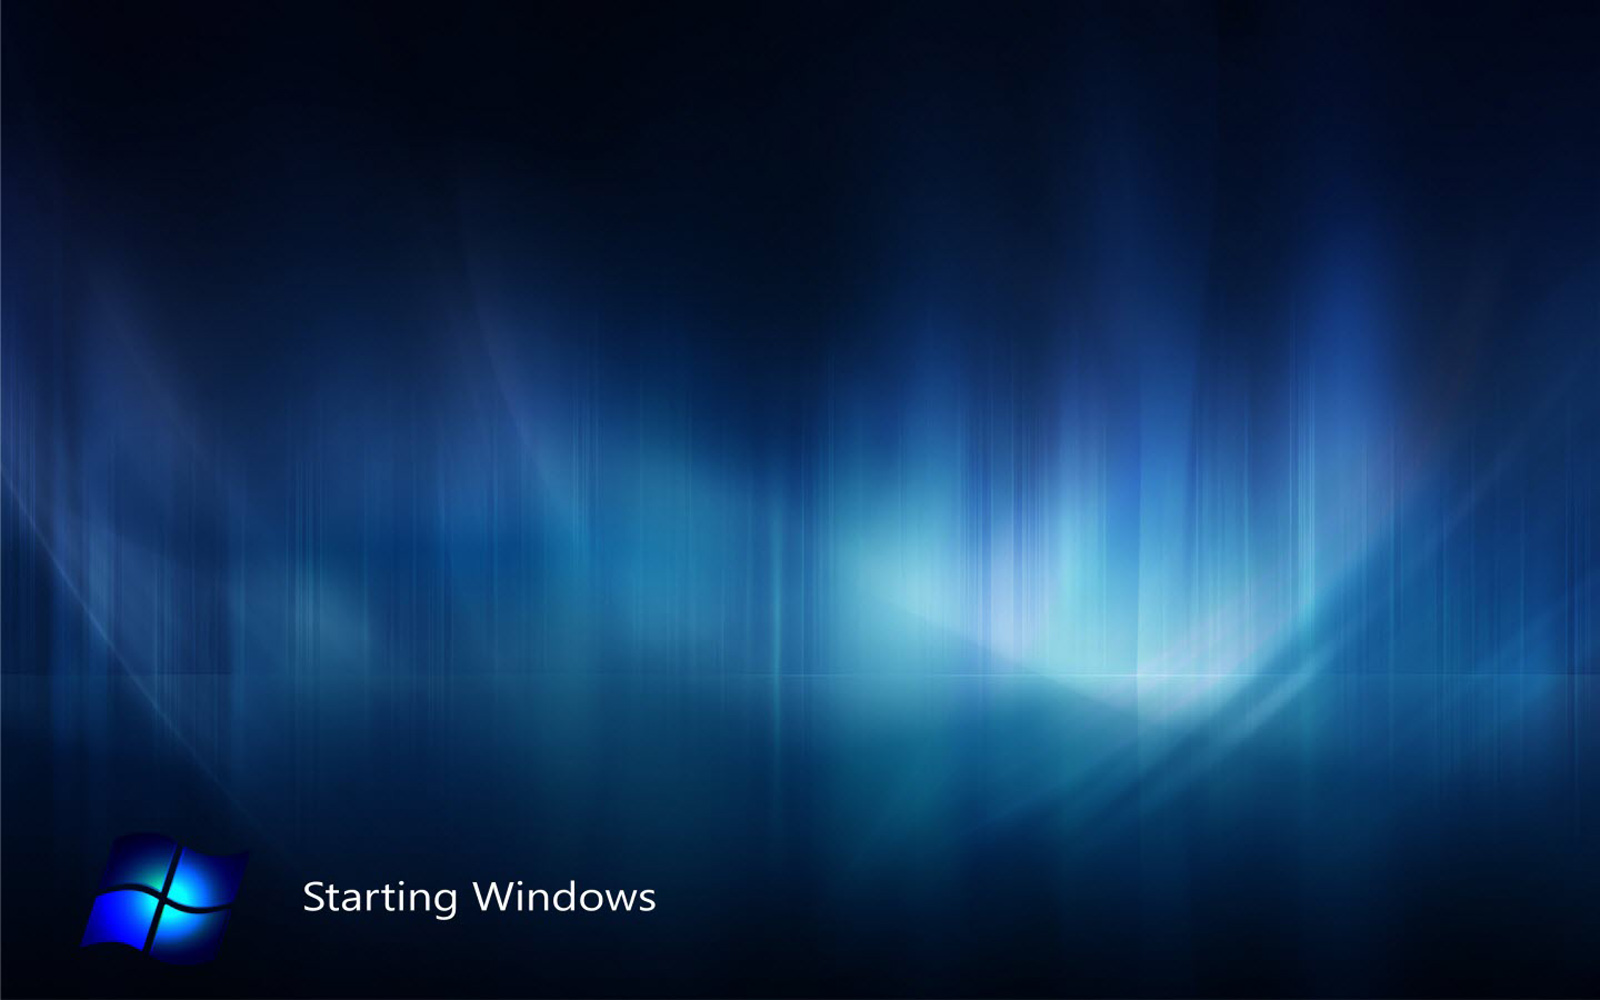 Windows 8 Background Themes Atoz Desktop Wallpapers